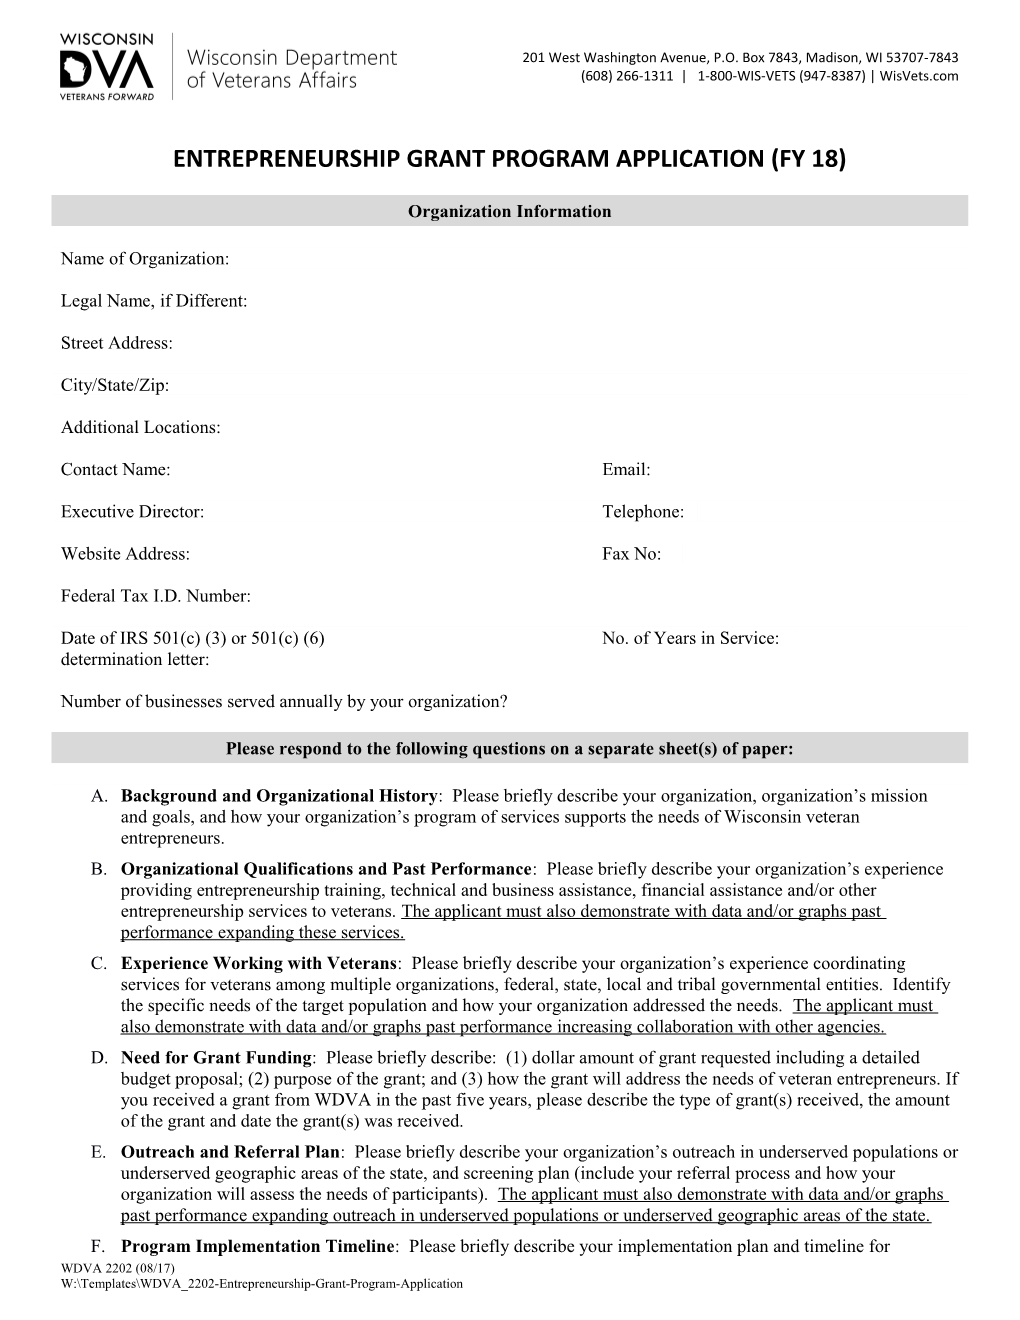 WDVA 2202 Entrepreneurship Grant Program Application